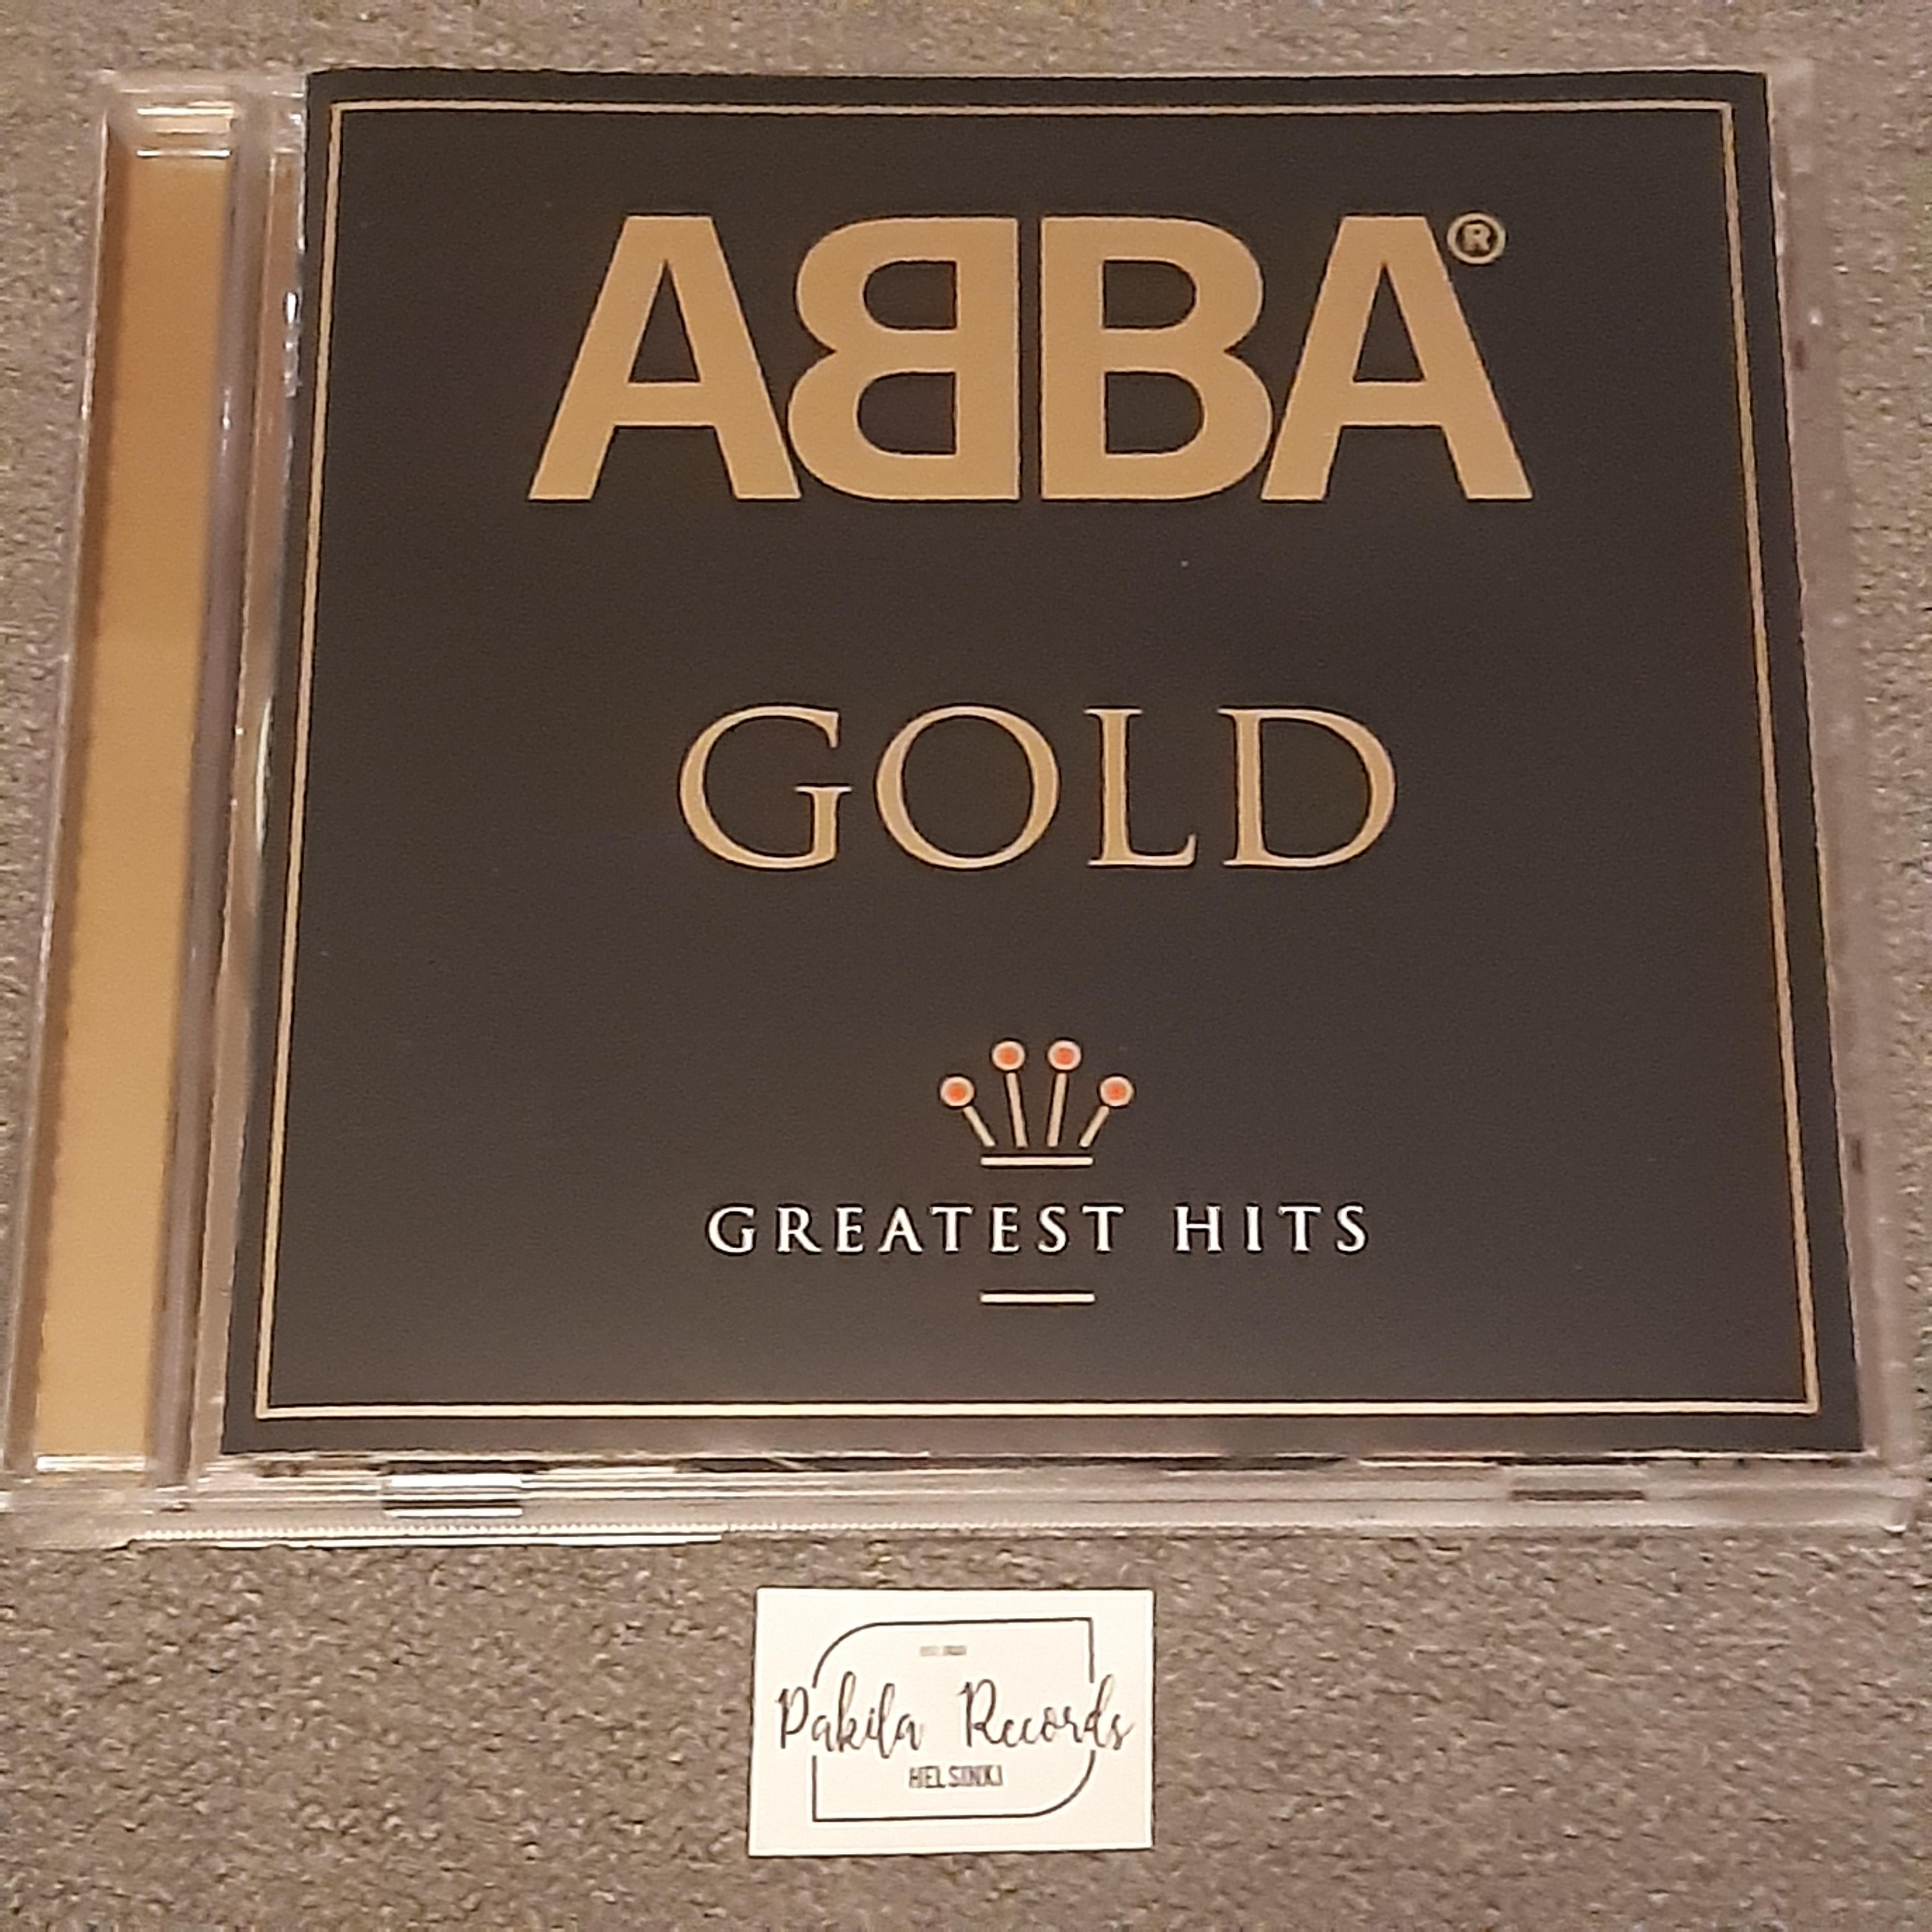 Abba - Gold, Greatest Hits - CD (käytetty)